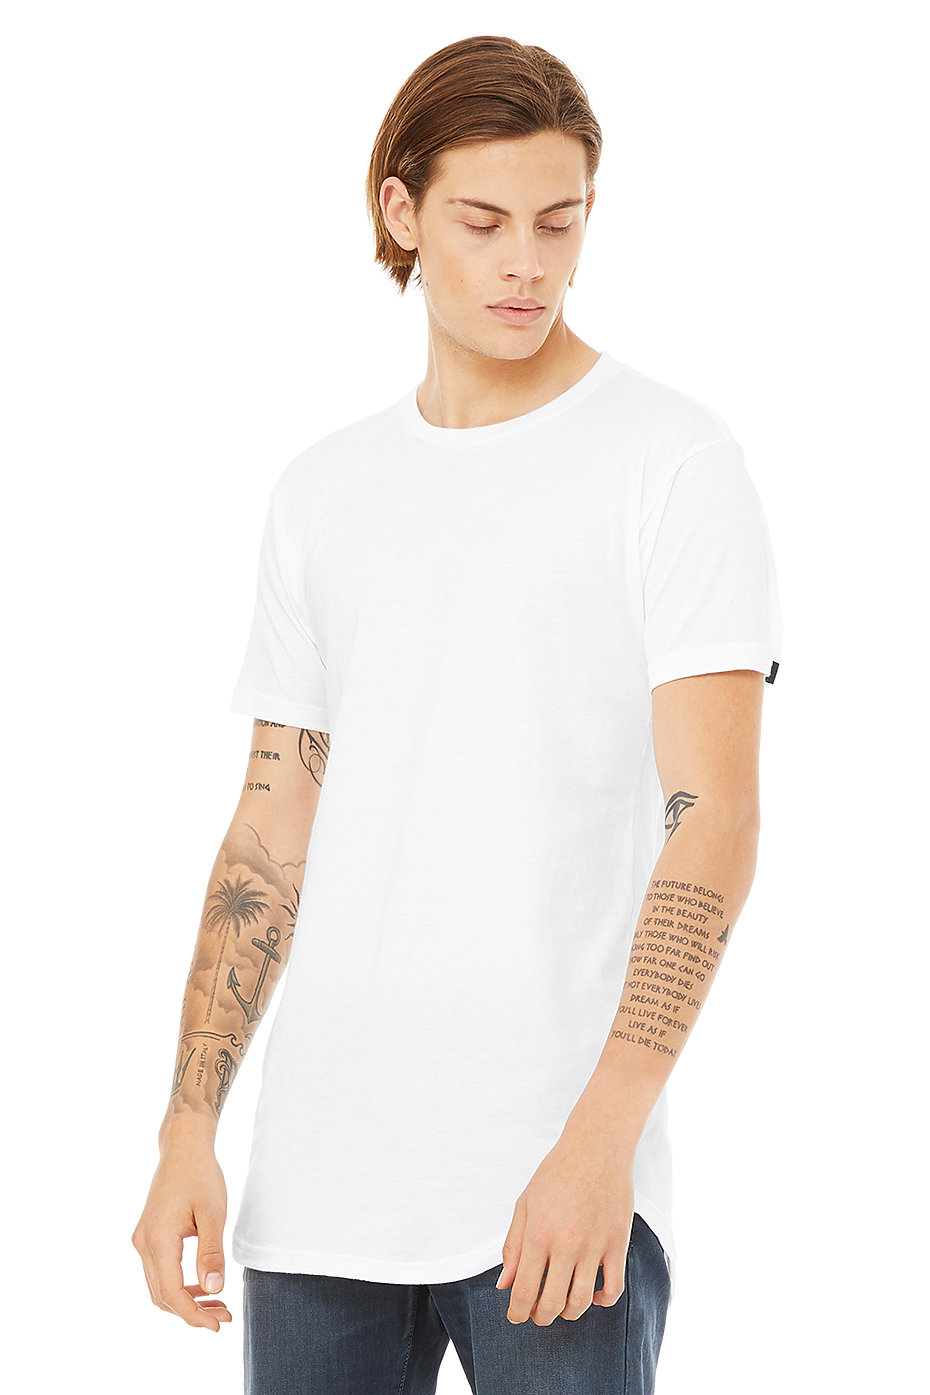 Men's Extended long T-shirt allongé Fashion Tee Casual BASIC HIPSTER Camo Tee